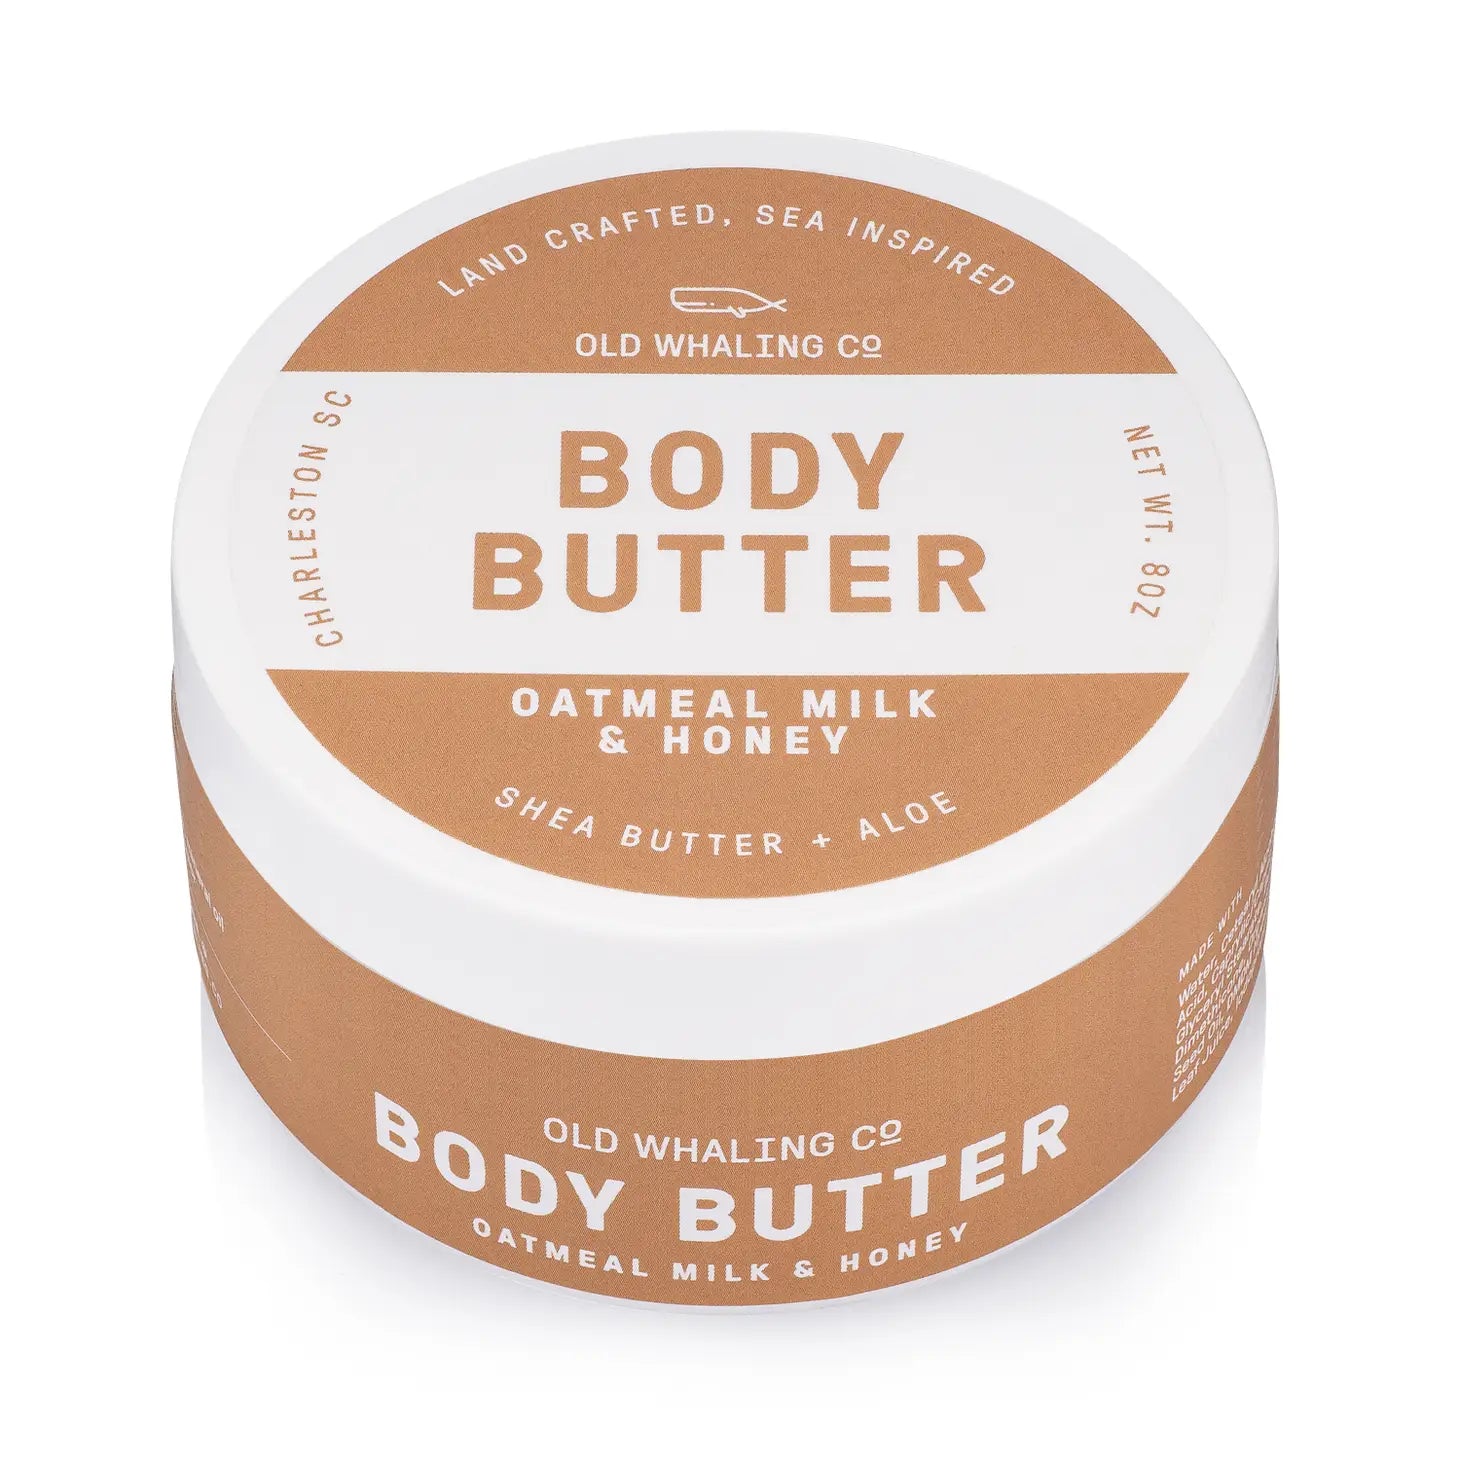 Oatmeal Milk + Honey Body Butter 8oz